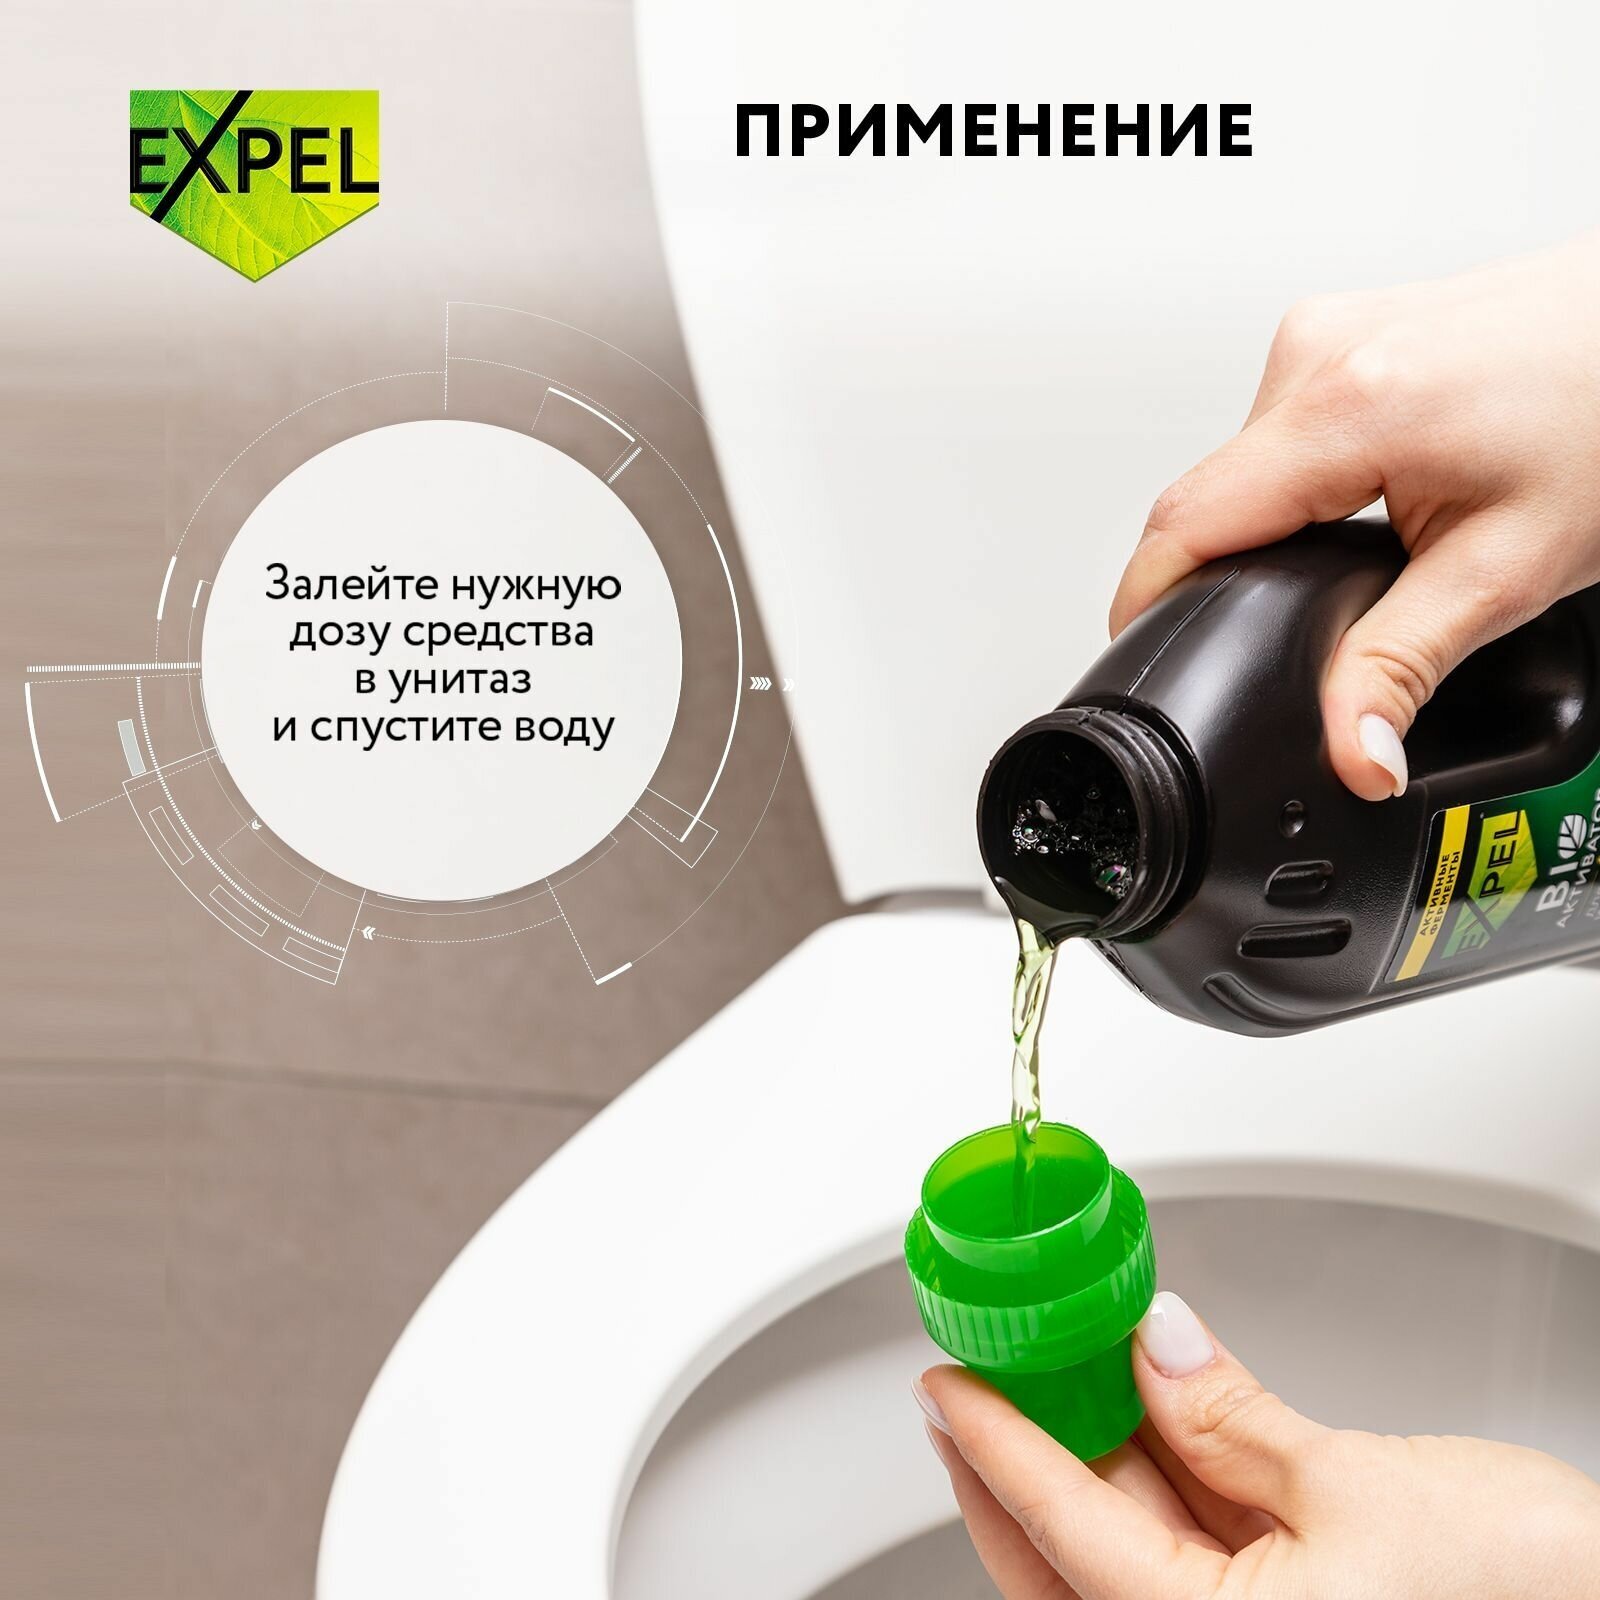 Жидкий биоактиватор Expel - фото №4